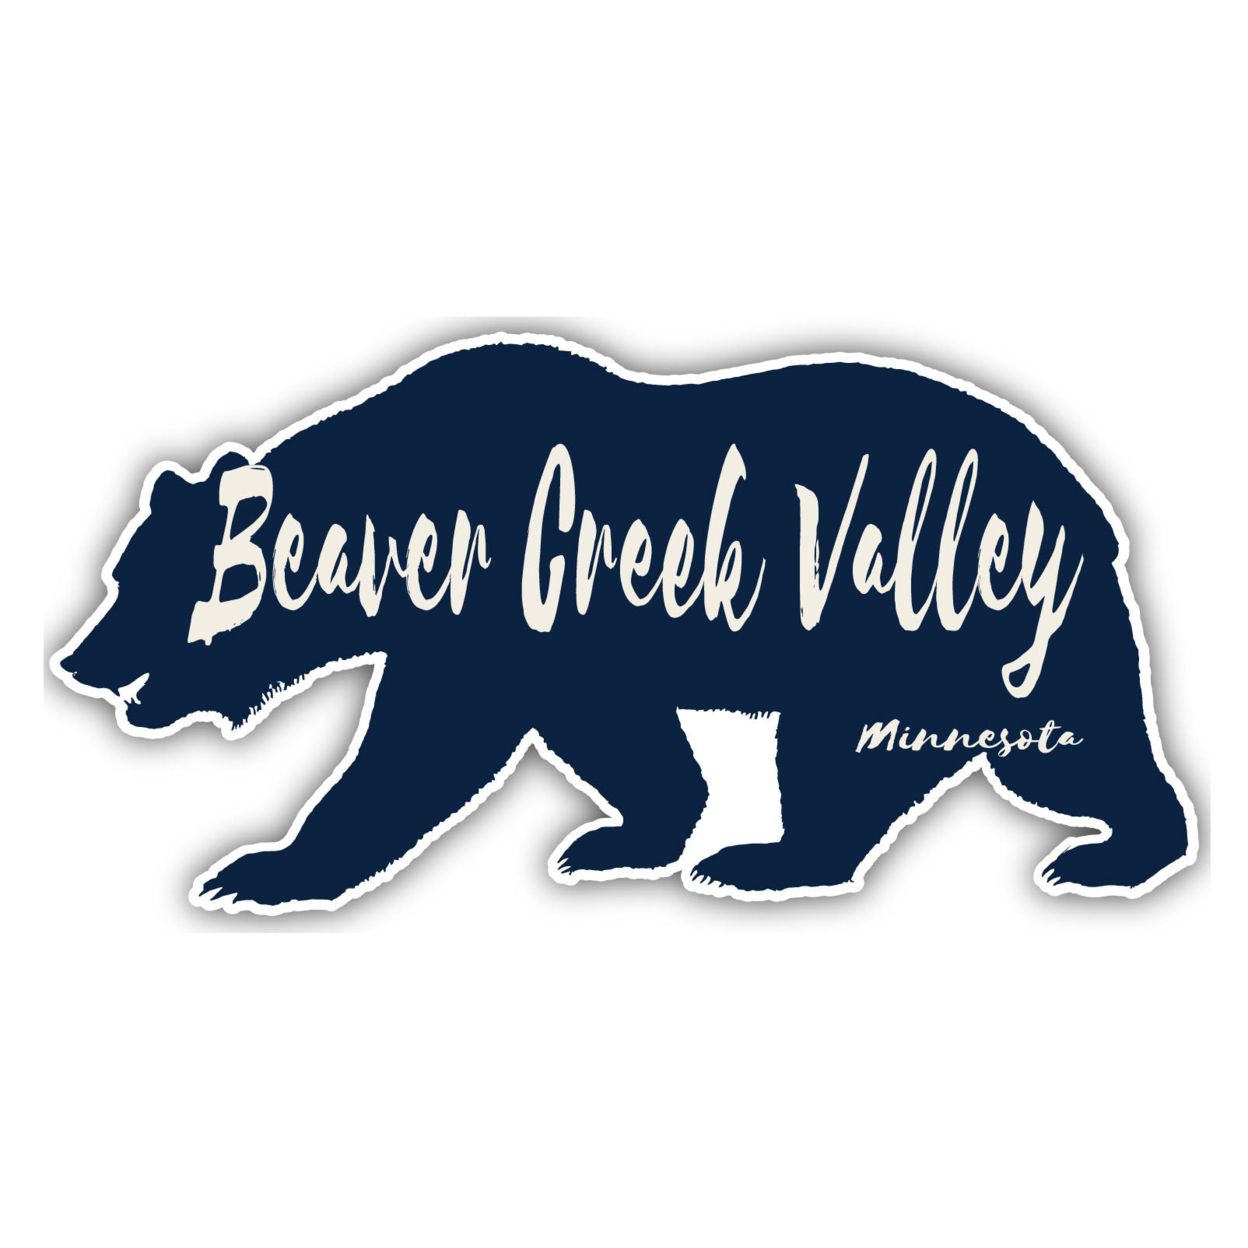 Beaver Creek Valley Minnesota Souvenir Decorative Stickers (Choose Theme And Size) - 4-Pack, 10-Inch, Bear